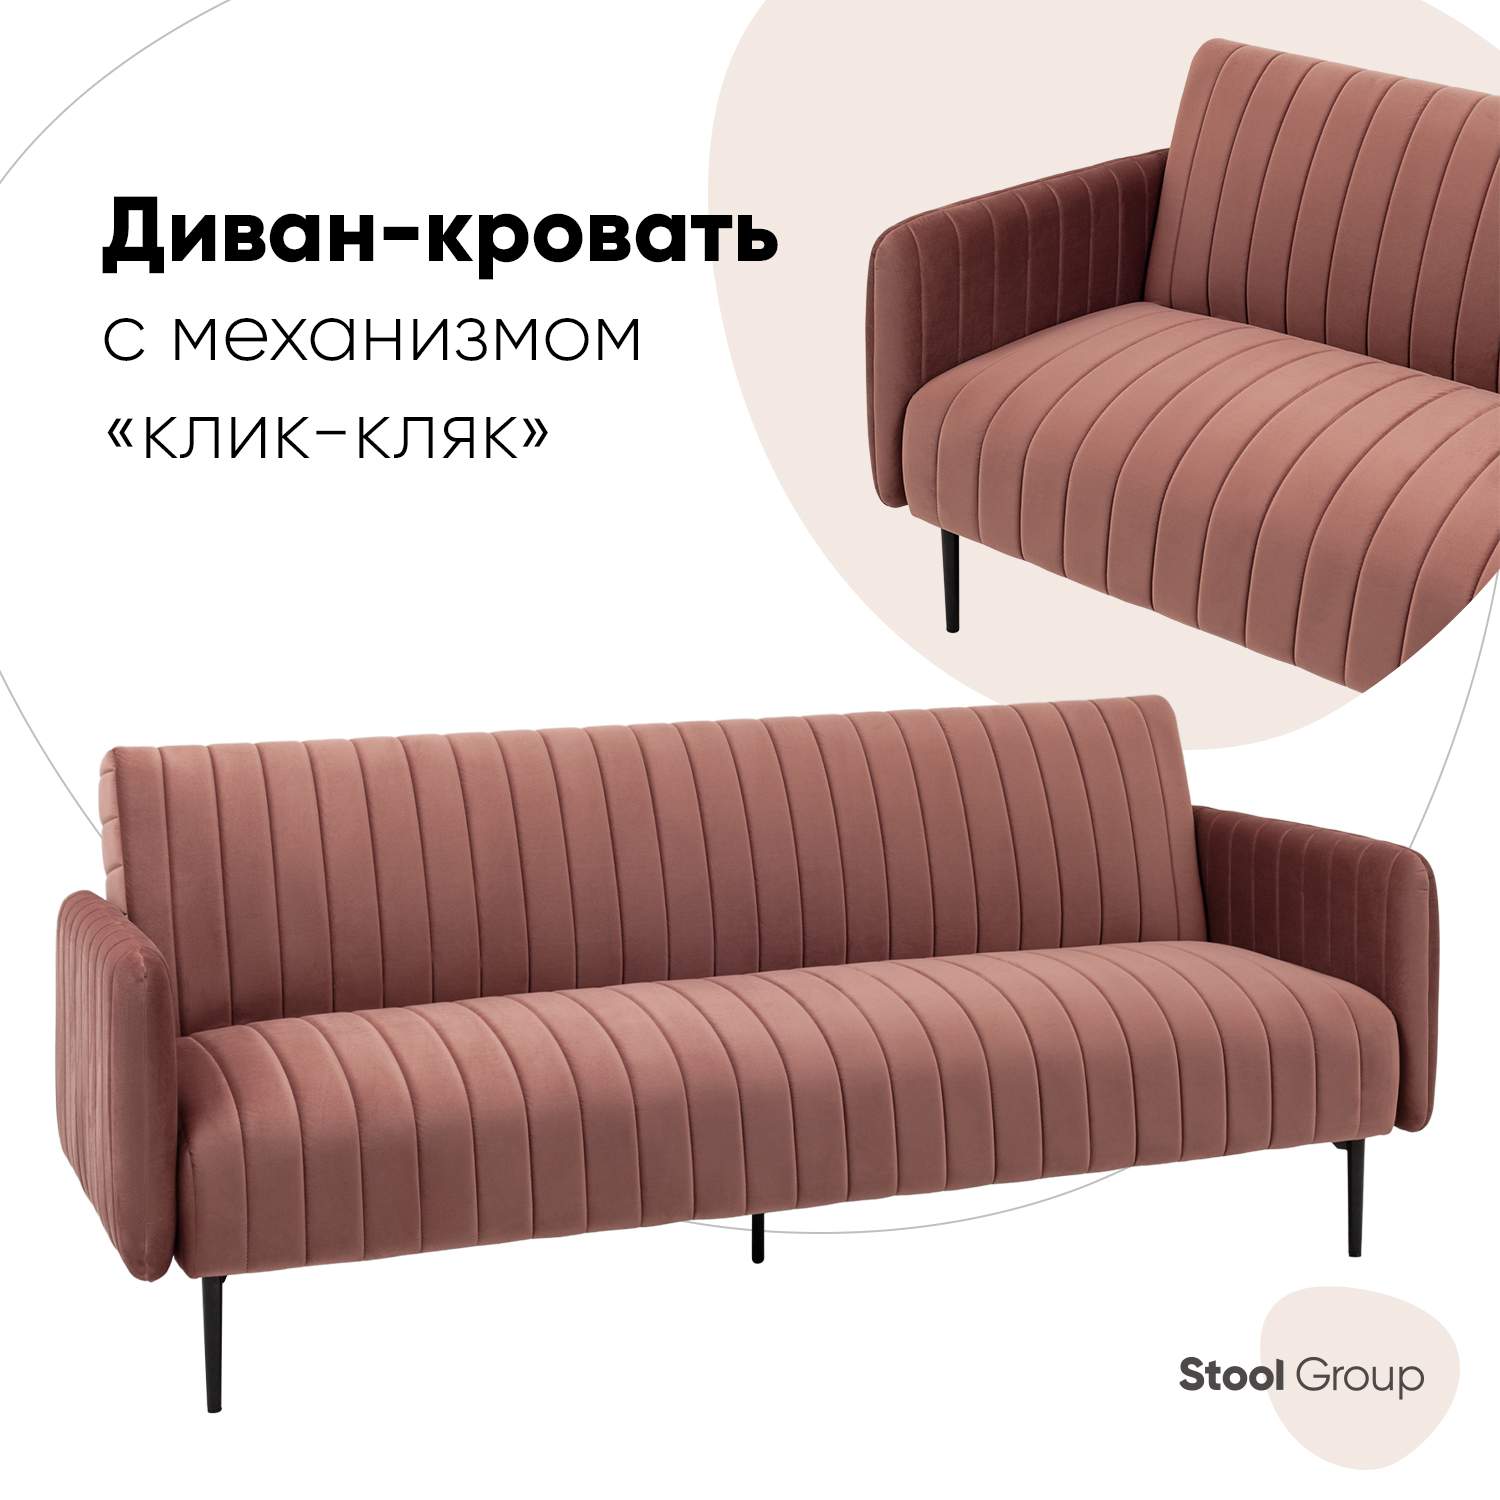 Диваны Stool Group - купить диван Stool Group, цены на Мегамаркет